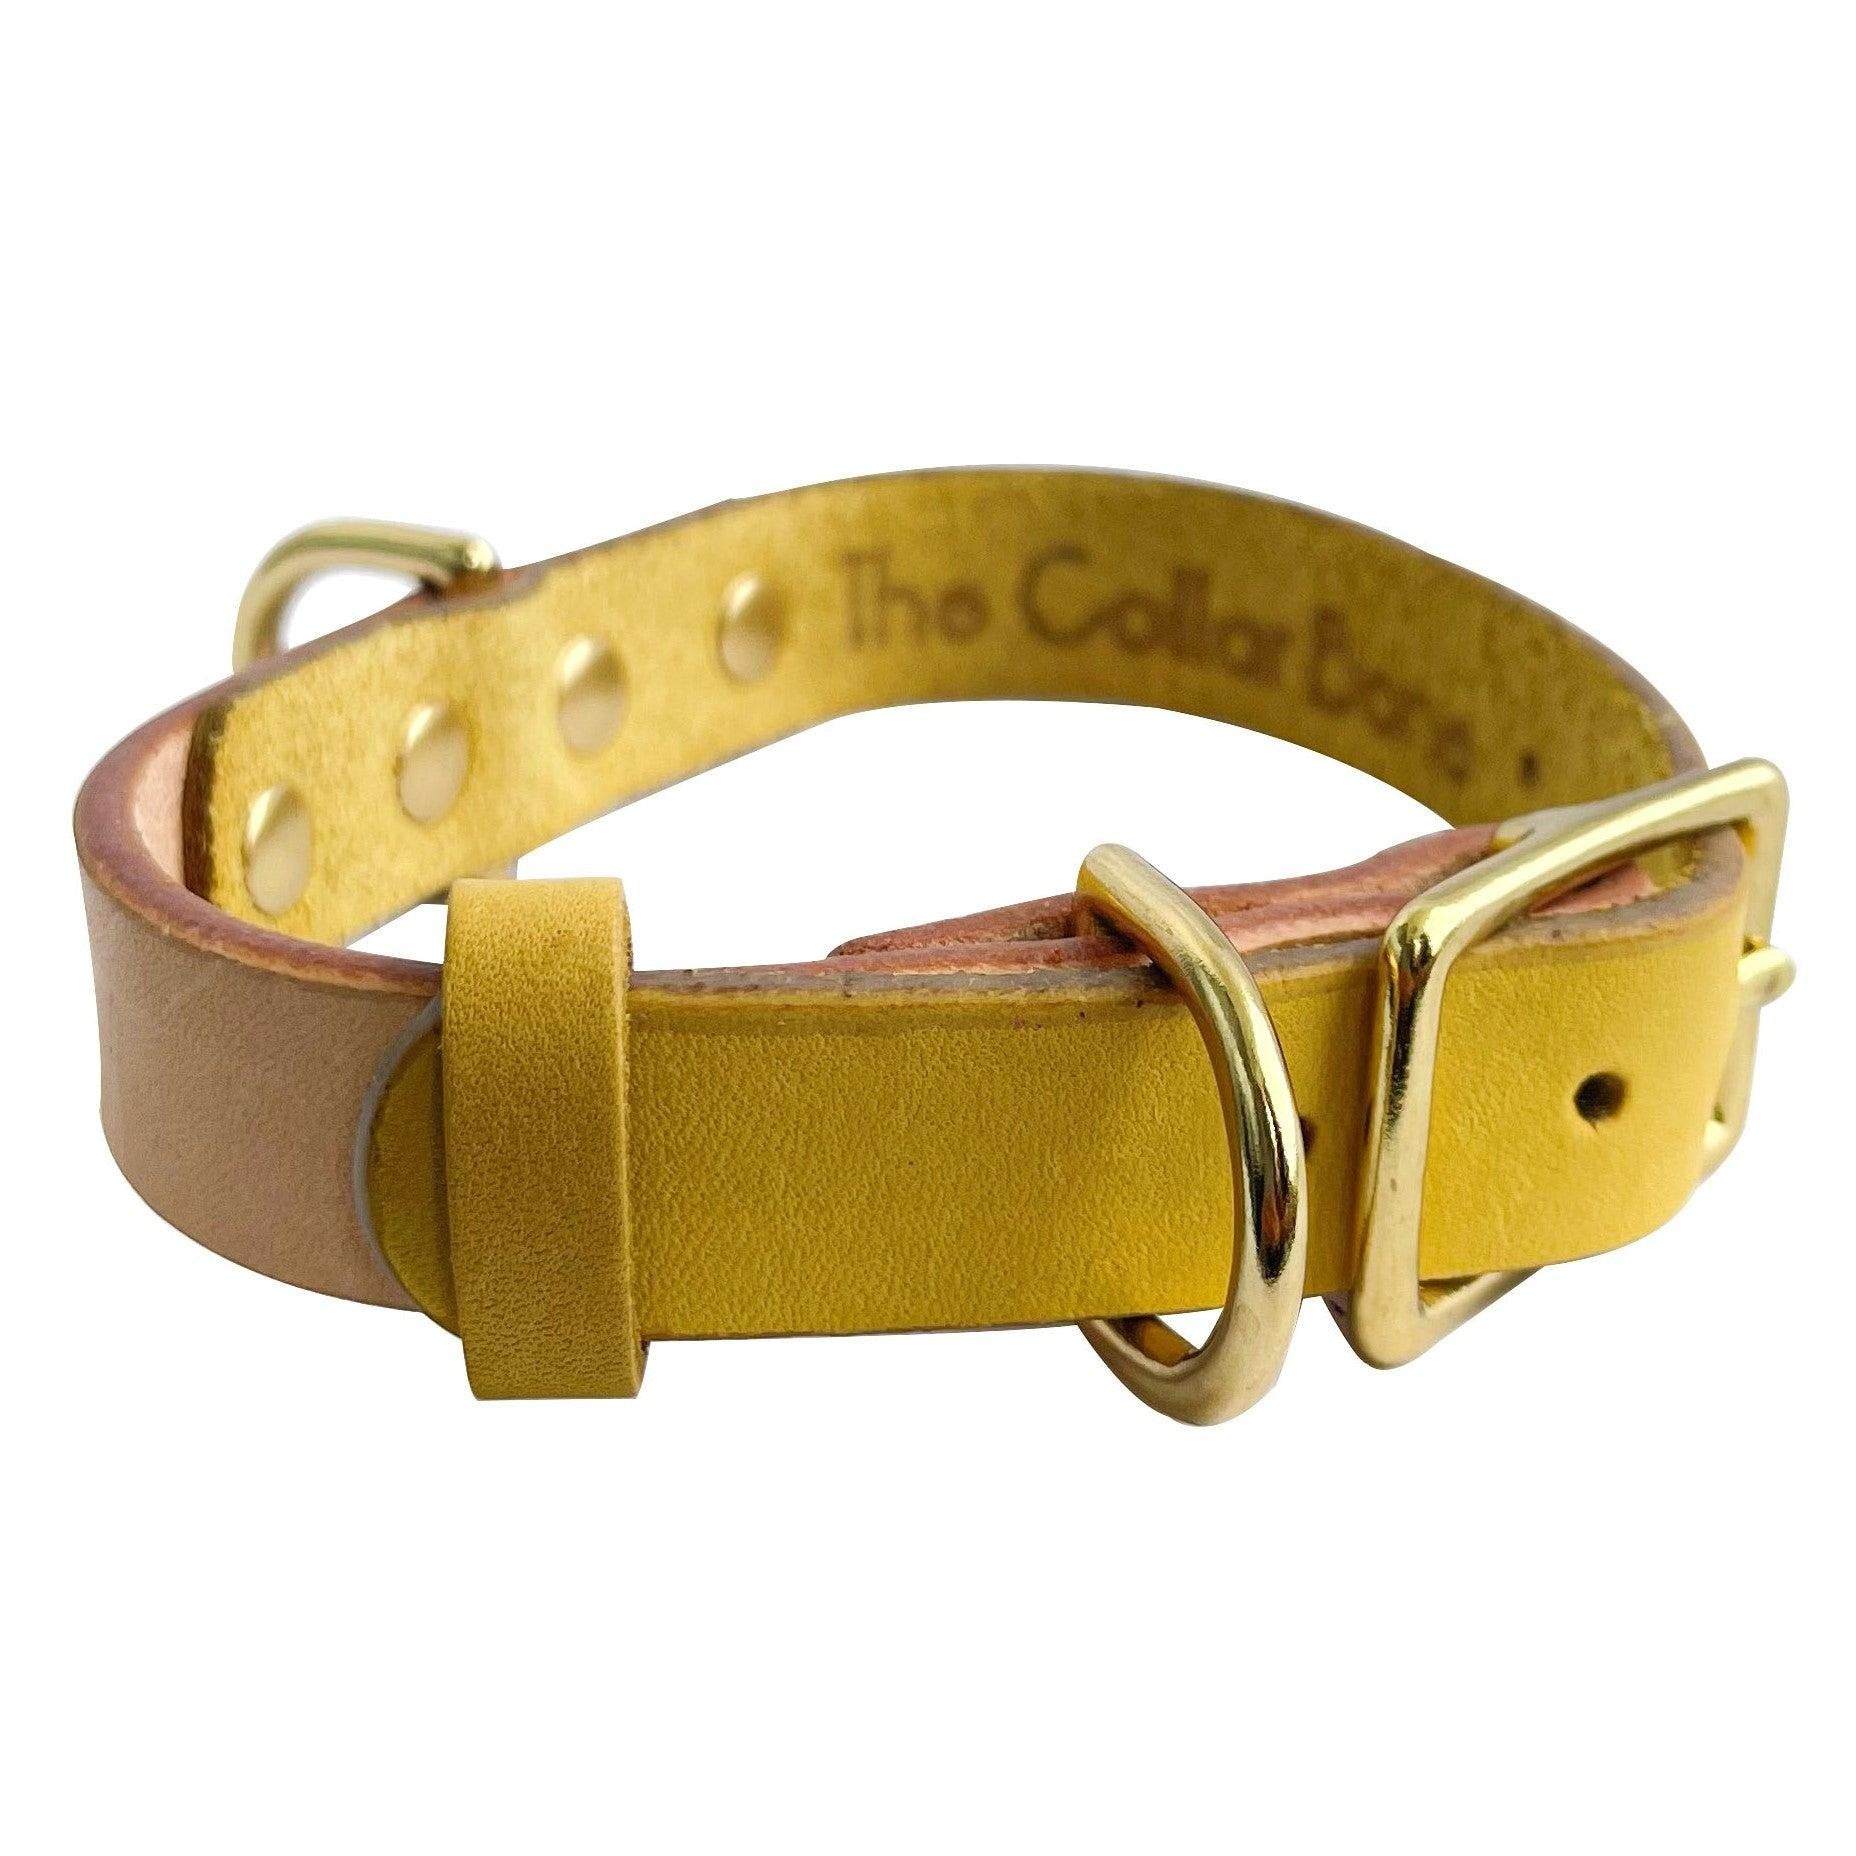 Pandora Dog Collar in Yellow